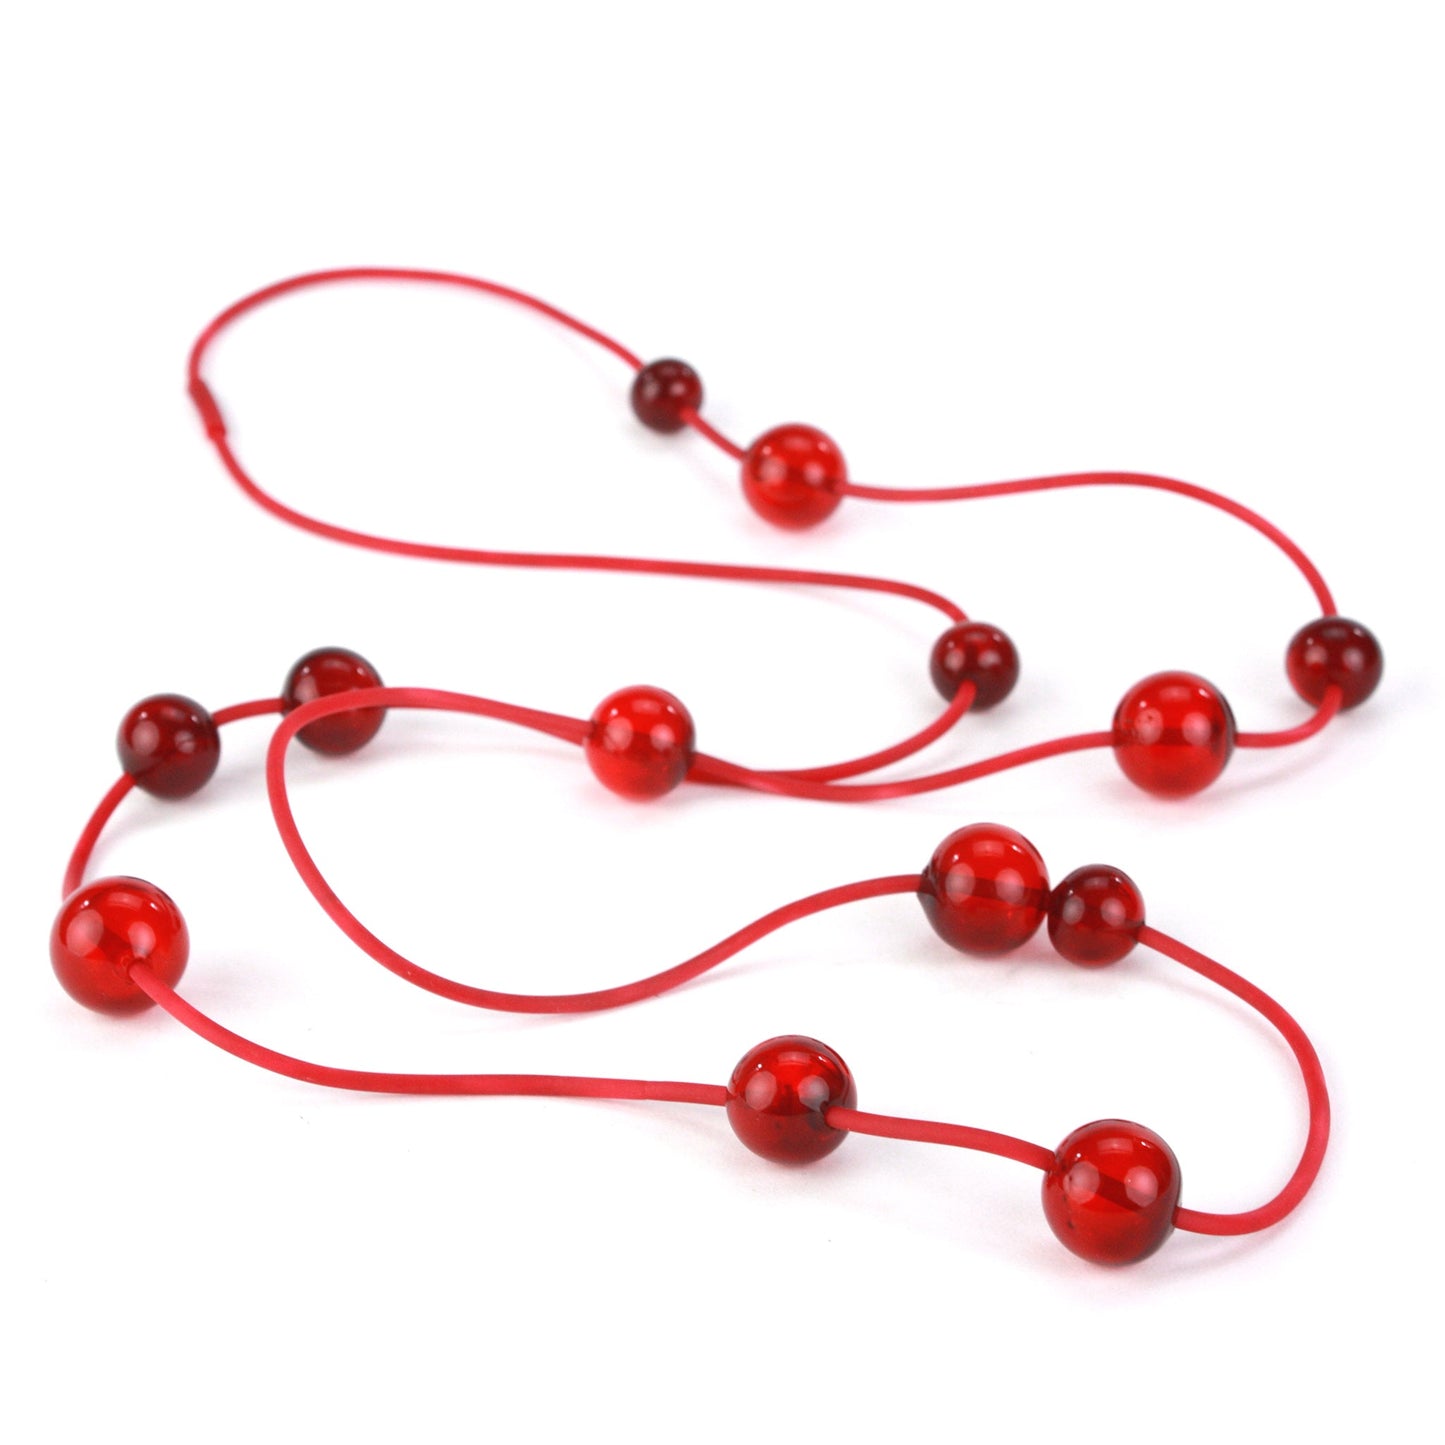 Orbit necklace -red